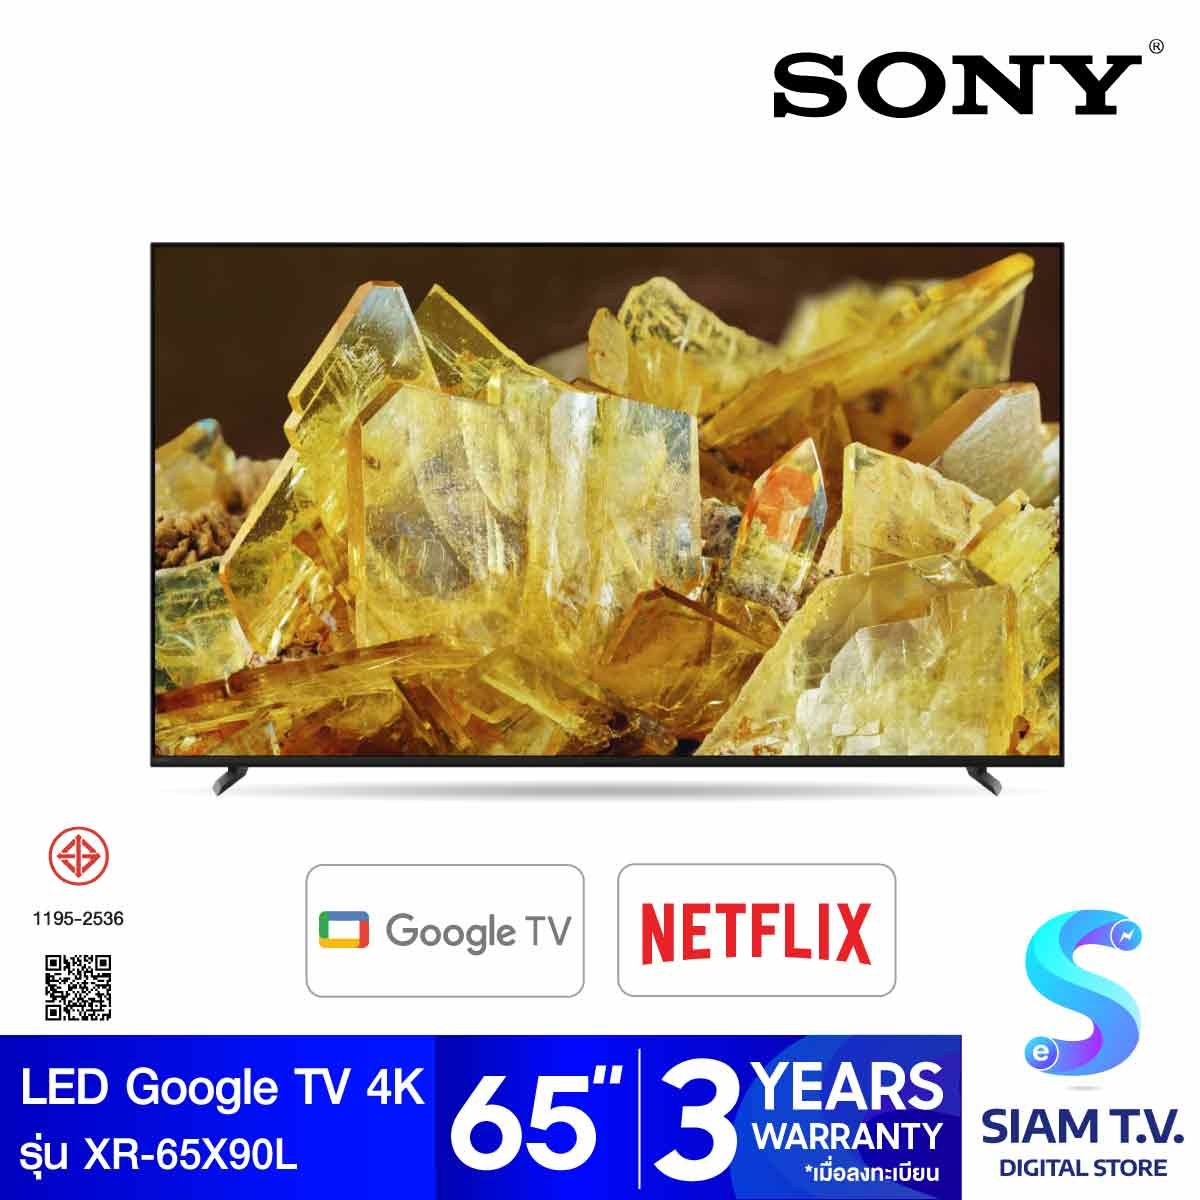 SONY LED Google TV 4K 120Hz รุ่น XR-65X90L 4K Ultra HD | High Dynamic Range (HDR) | Smart TV (Google TV)